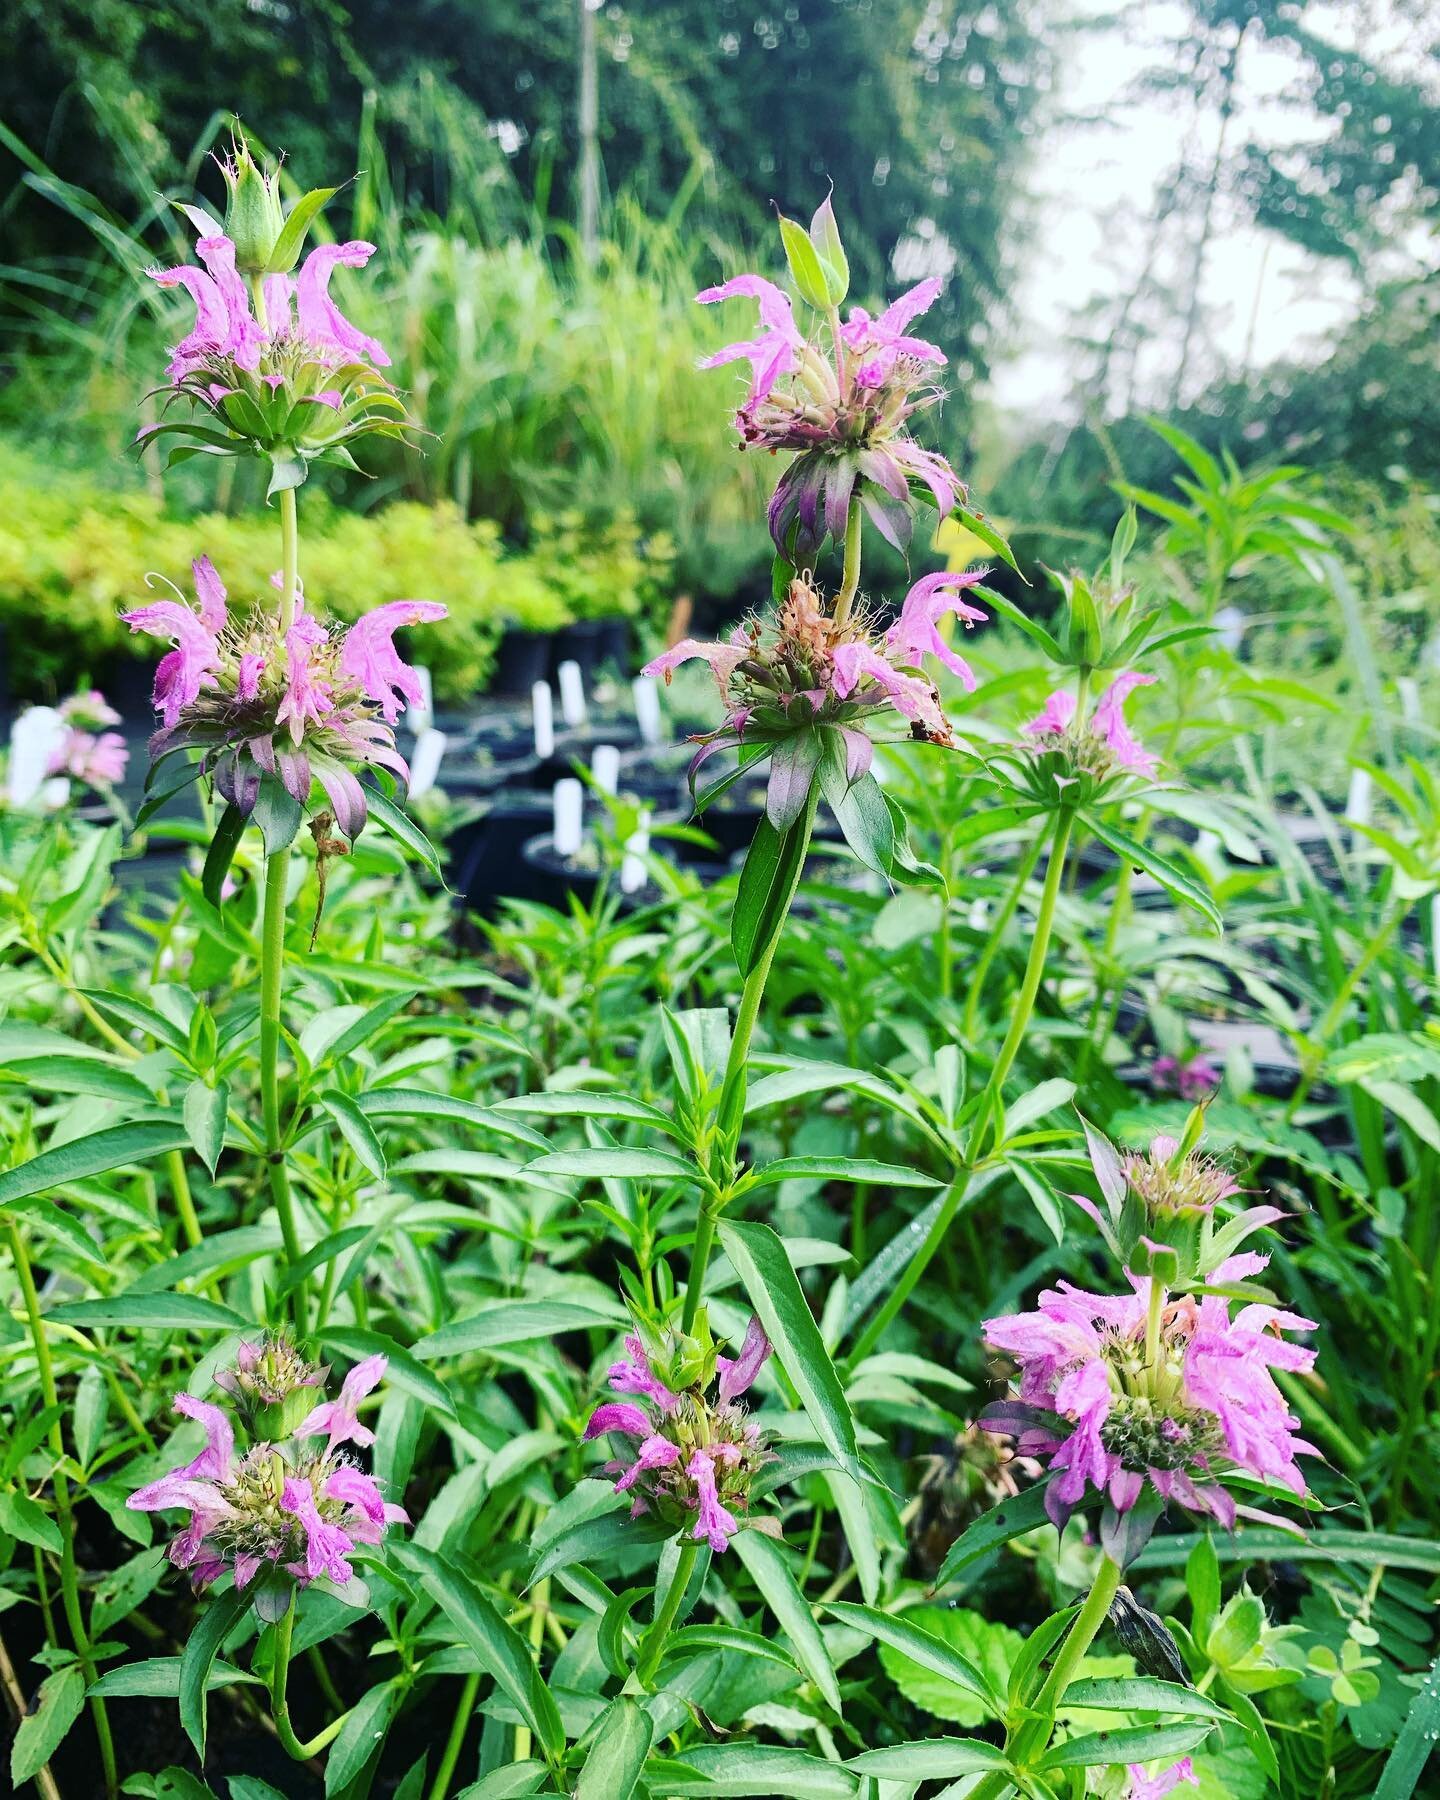 Bee balm giving those summer vibes 😍 Check out our current availability @ link in bio // PLANTS 

#everydayfarmandgarden #beebalm #nativeplants #perennialgarden #pollinatorgarden #pollinators